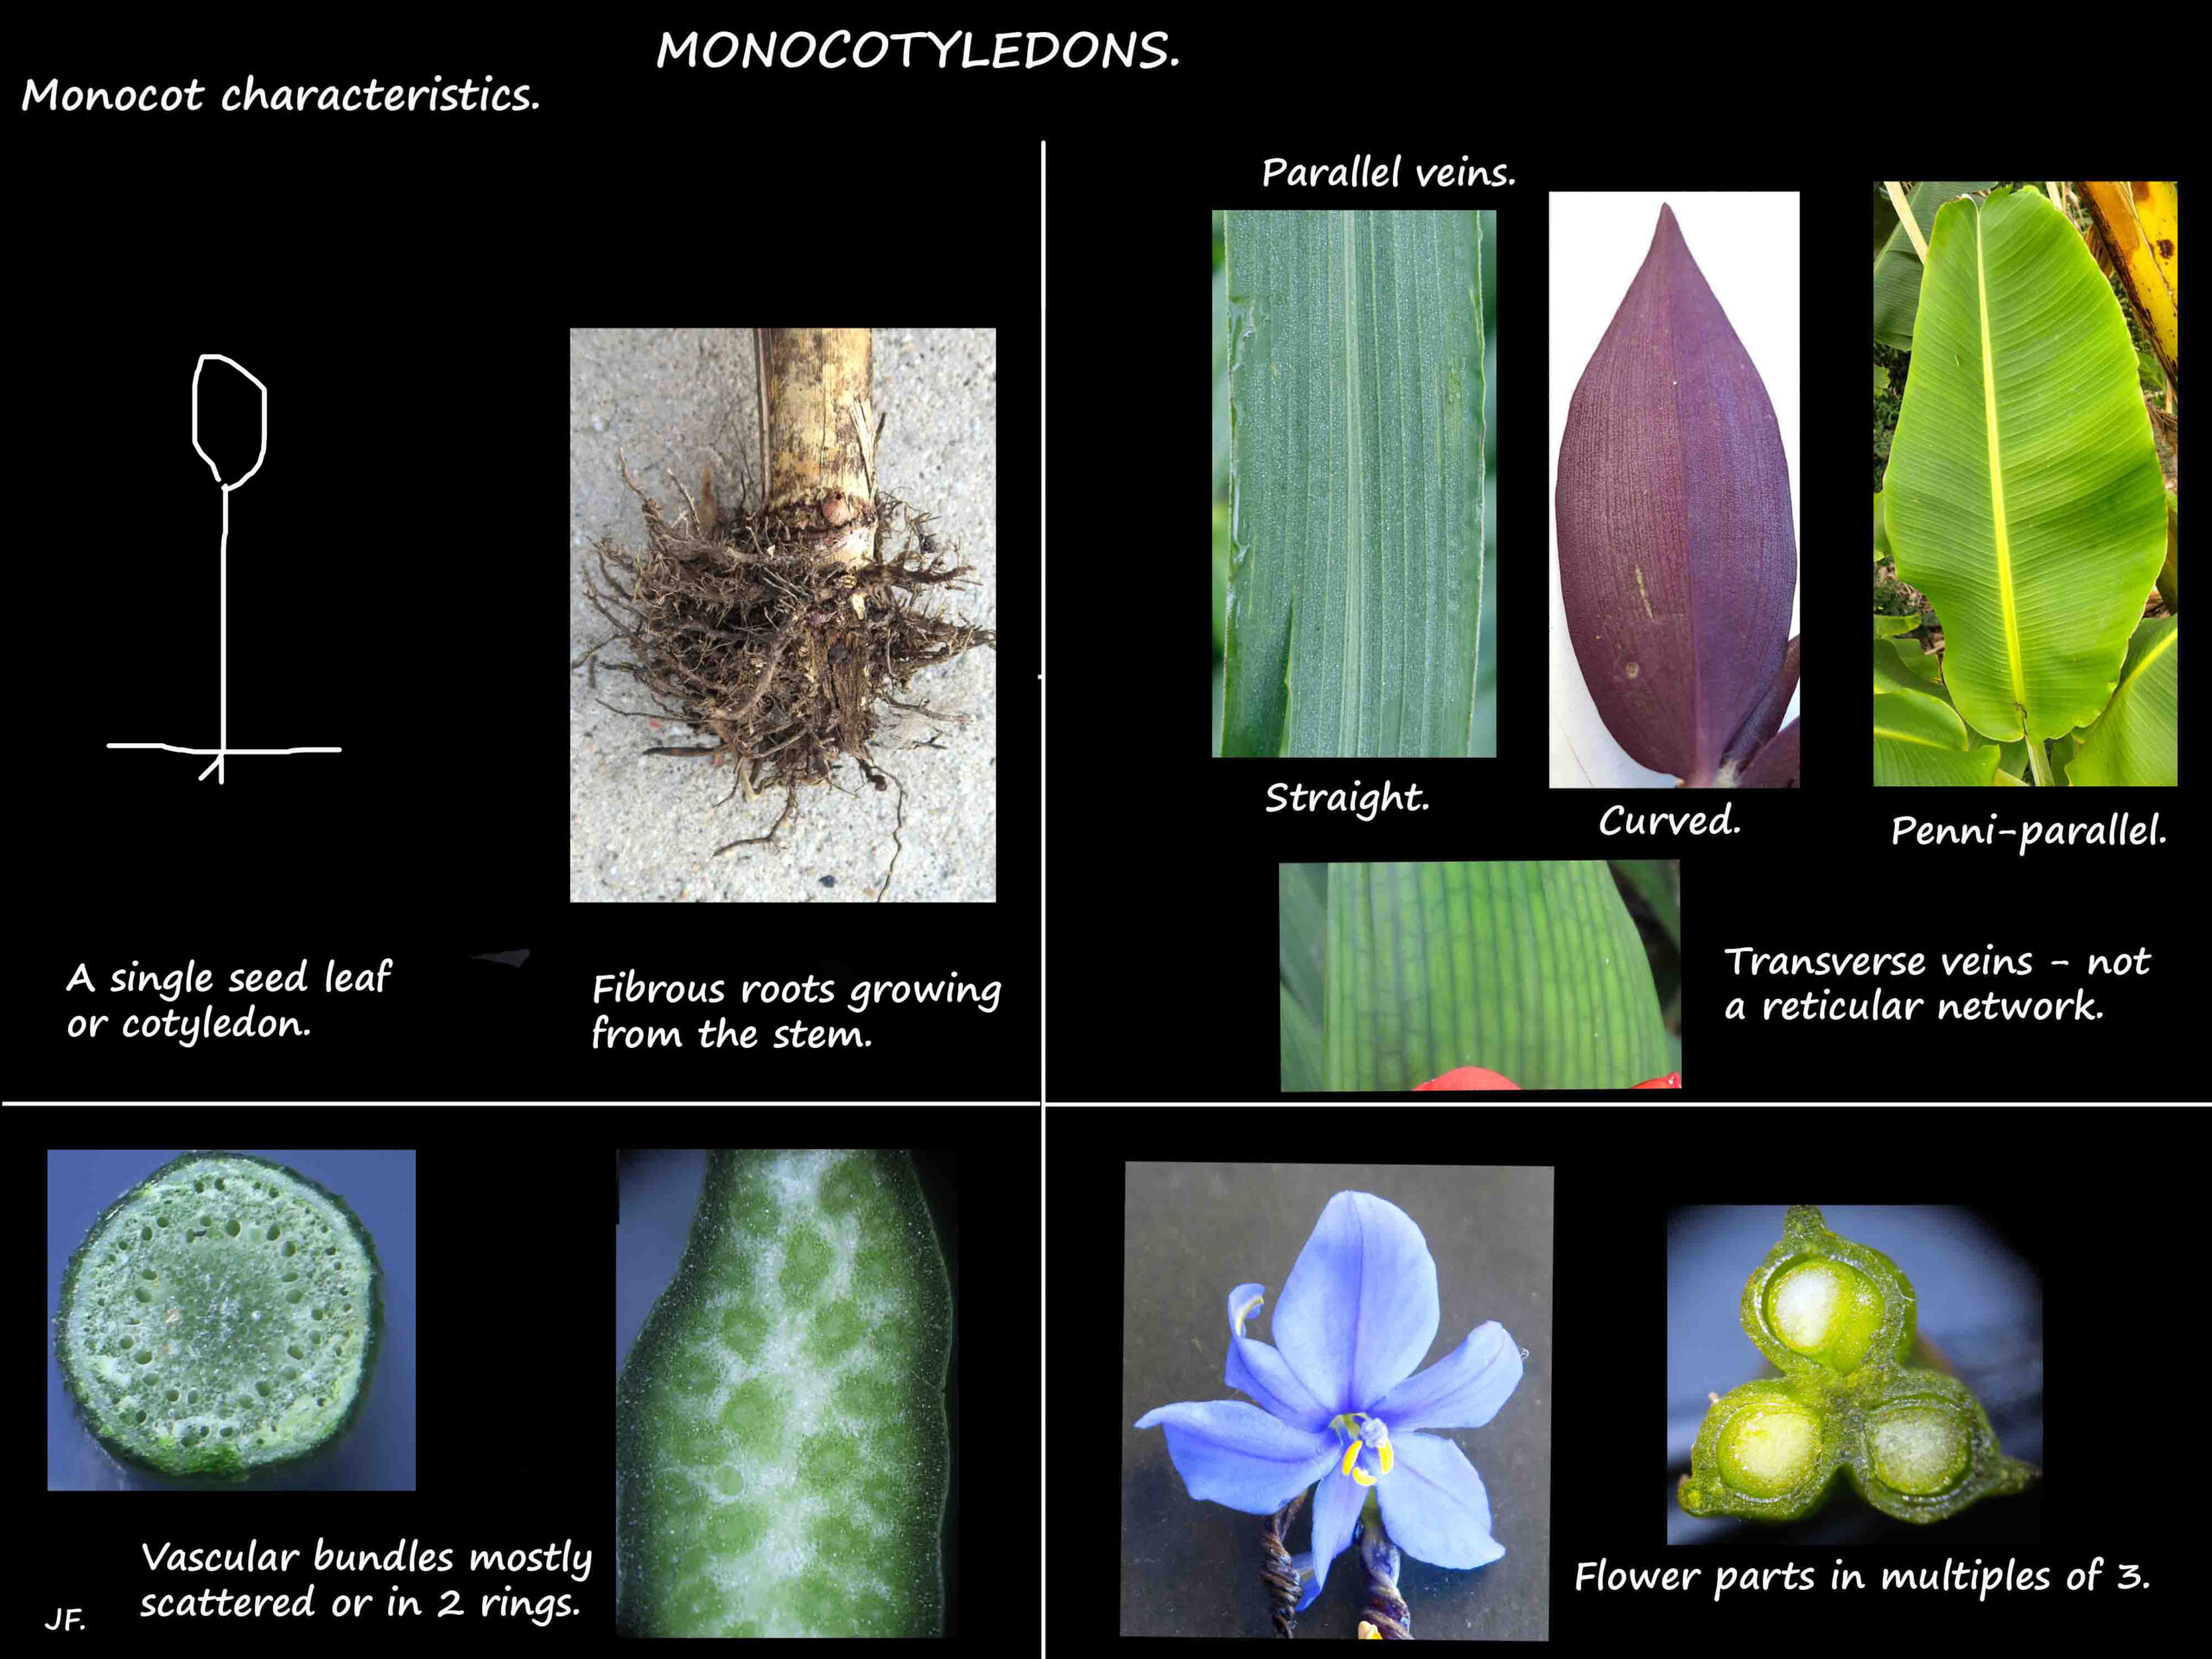 Monocot features